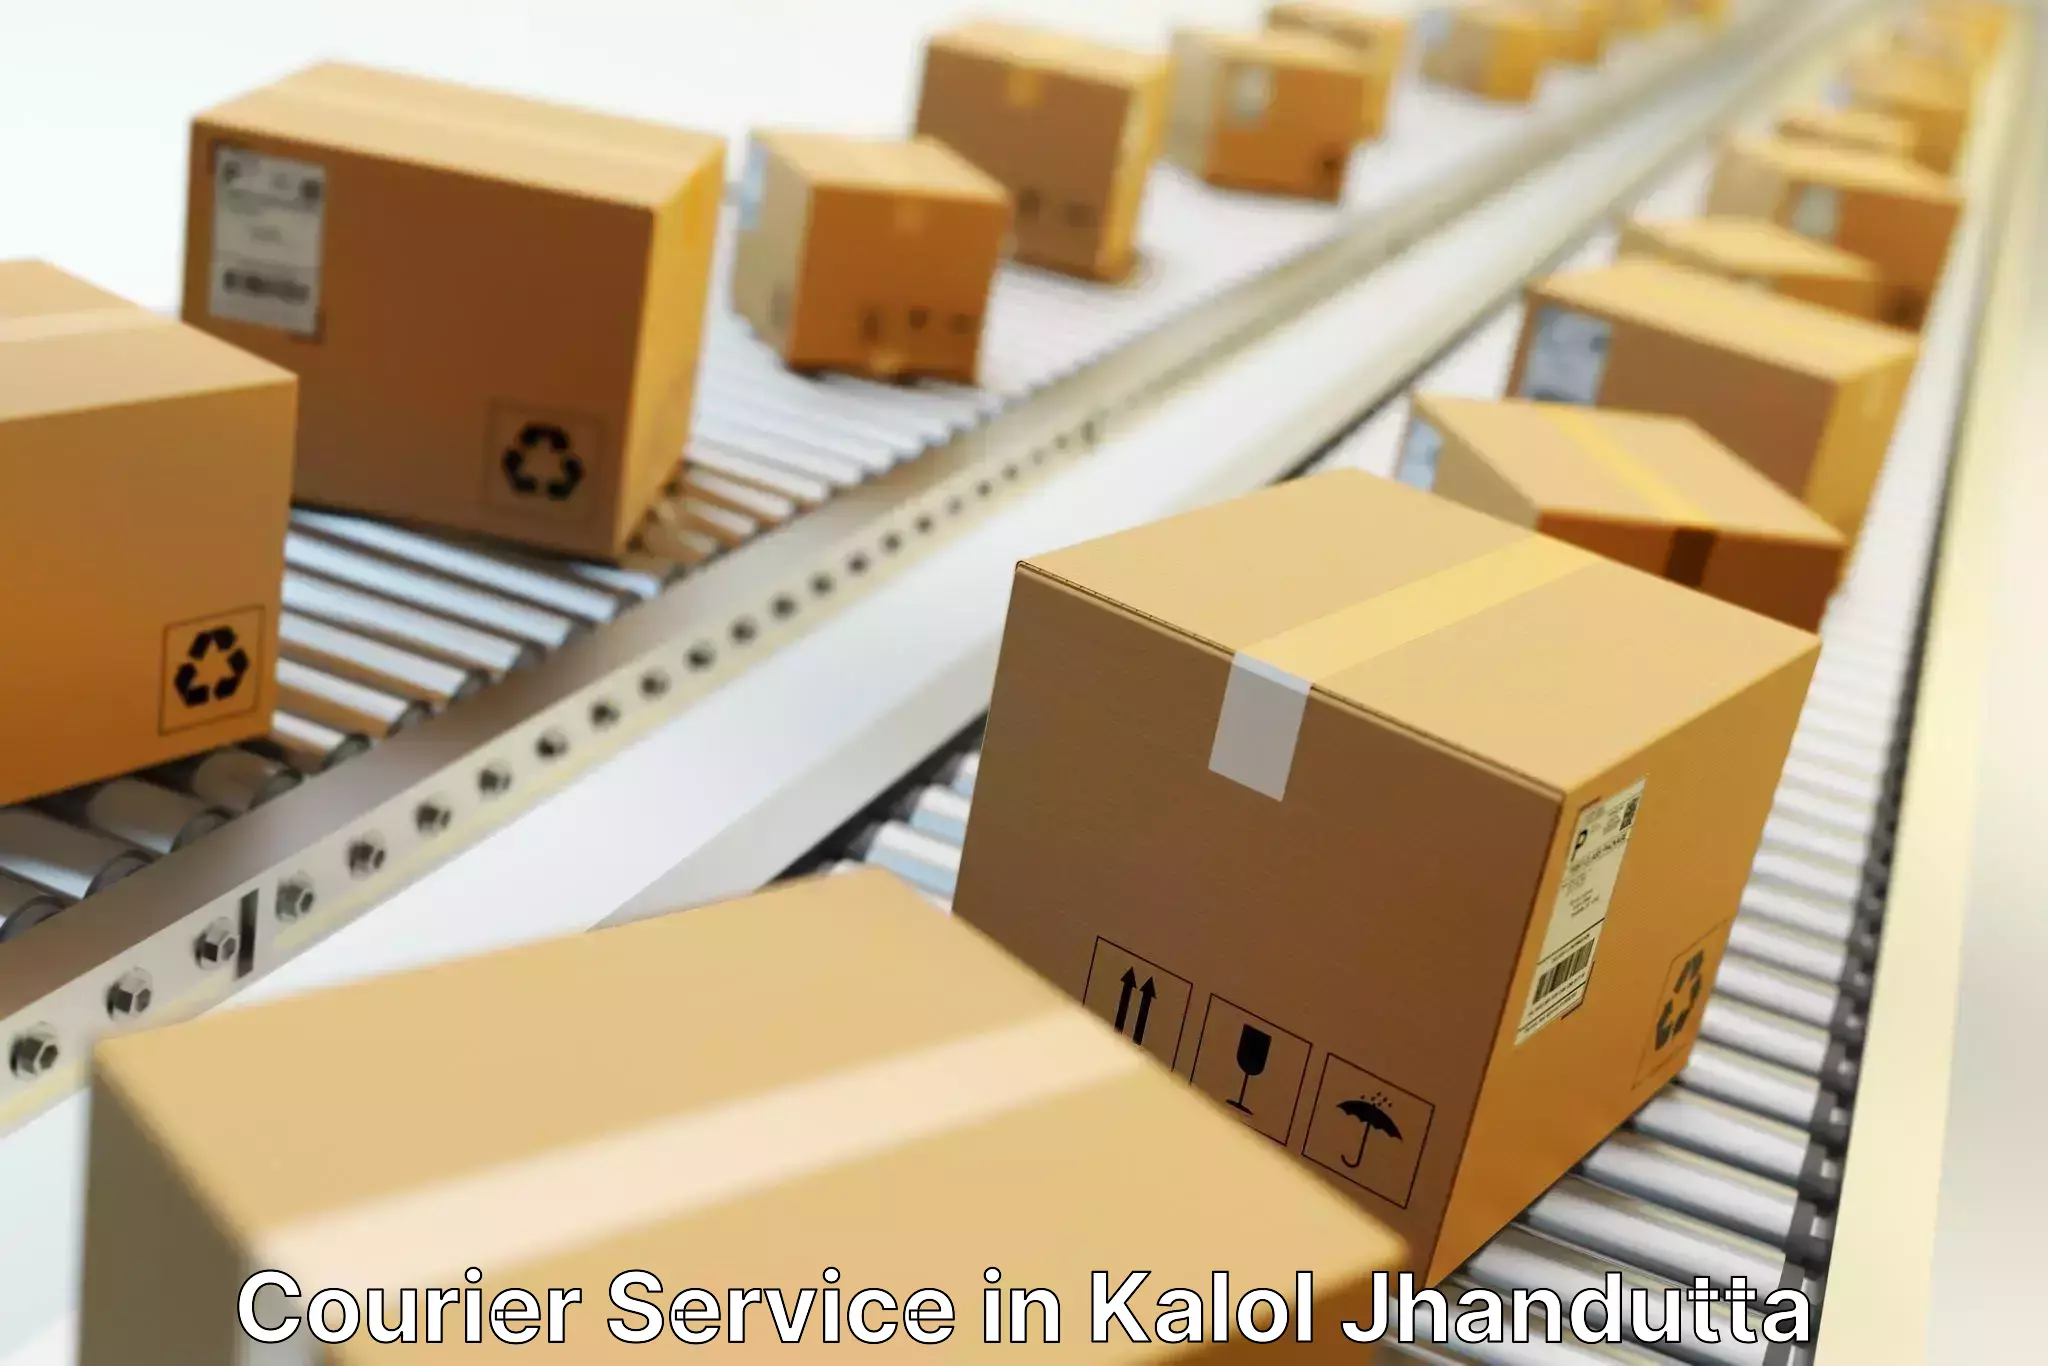 Comprehensive shipping network in Kalol Jhandutta